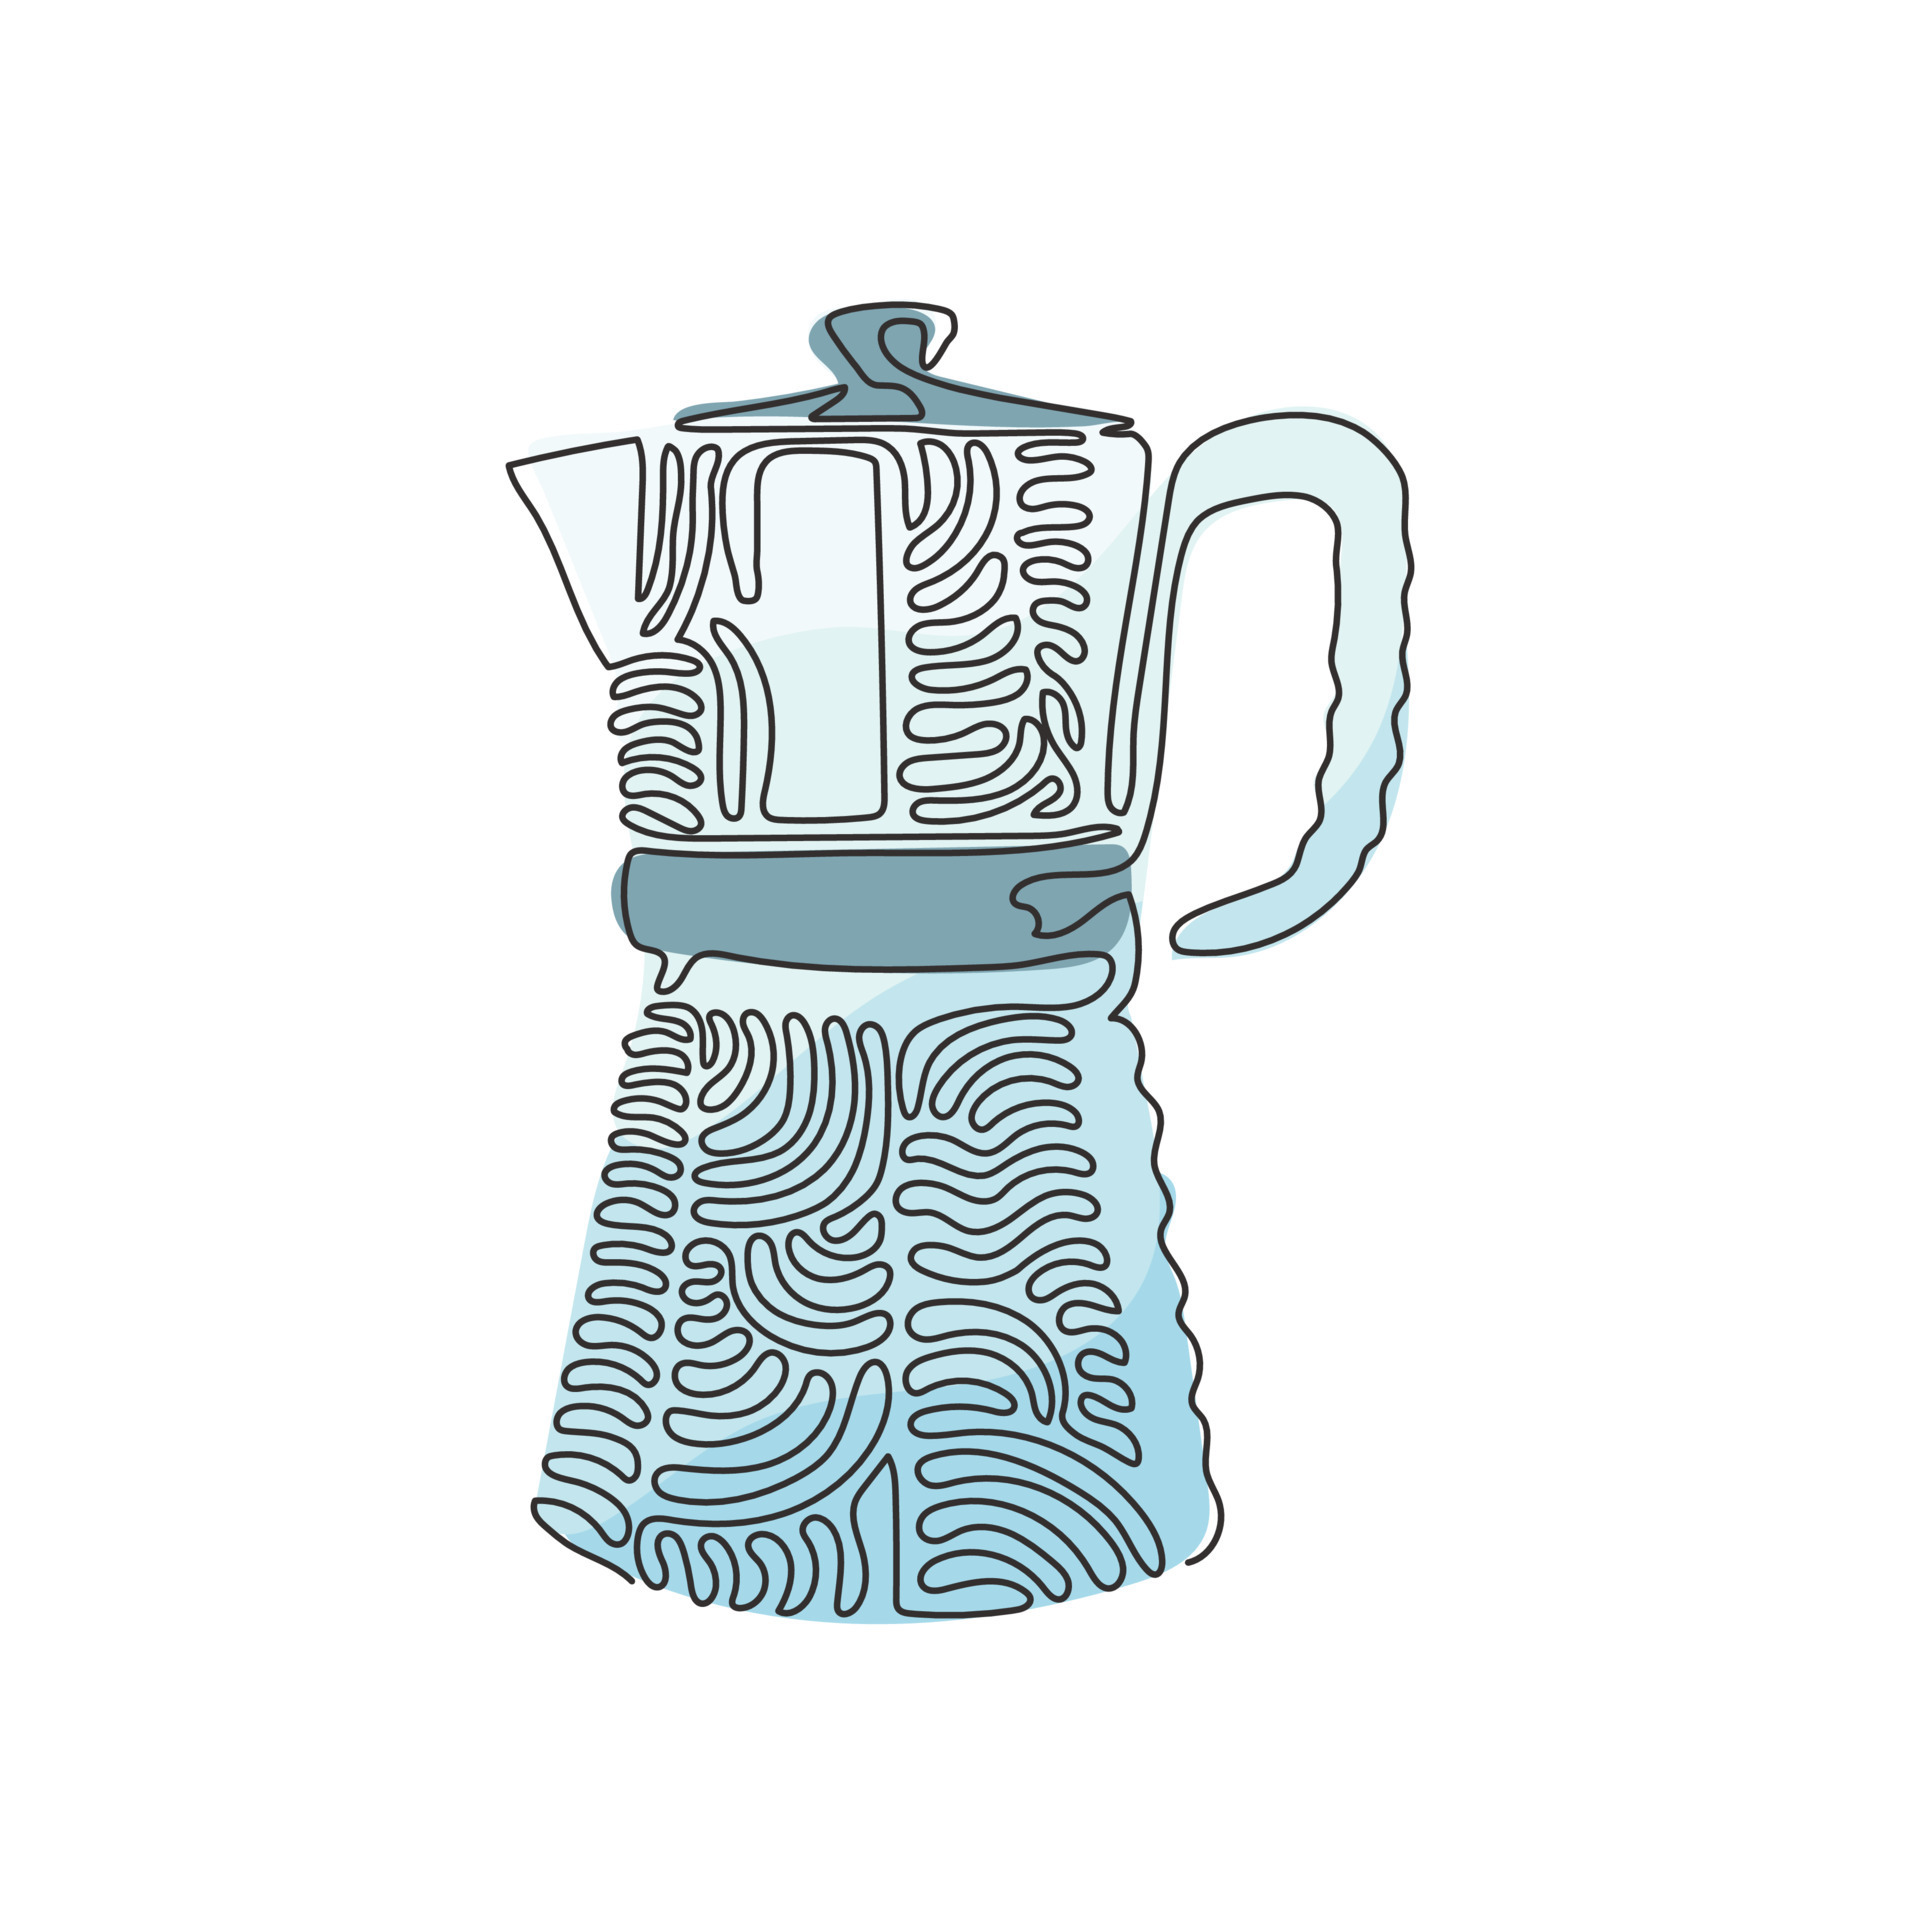 https://static.vecteezy.com/system/resources/previews/023/439/647/original/single-one-line-drawing-italian-coffee-maker-espresso-machine-moka-express-mocha-coffee-moka-pot-coffee-shop-tools-swirl-curl-style-continuous-line-draw-design-graphic-illustration-vector.jpg